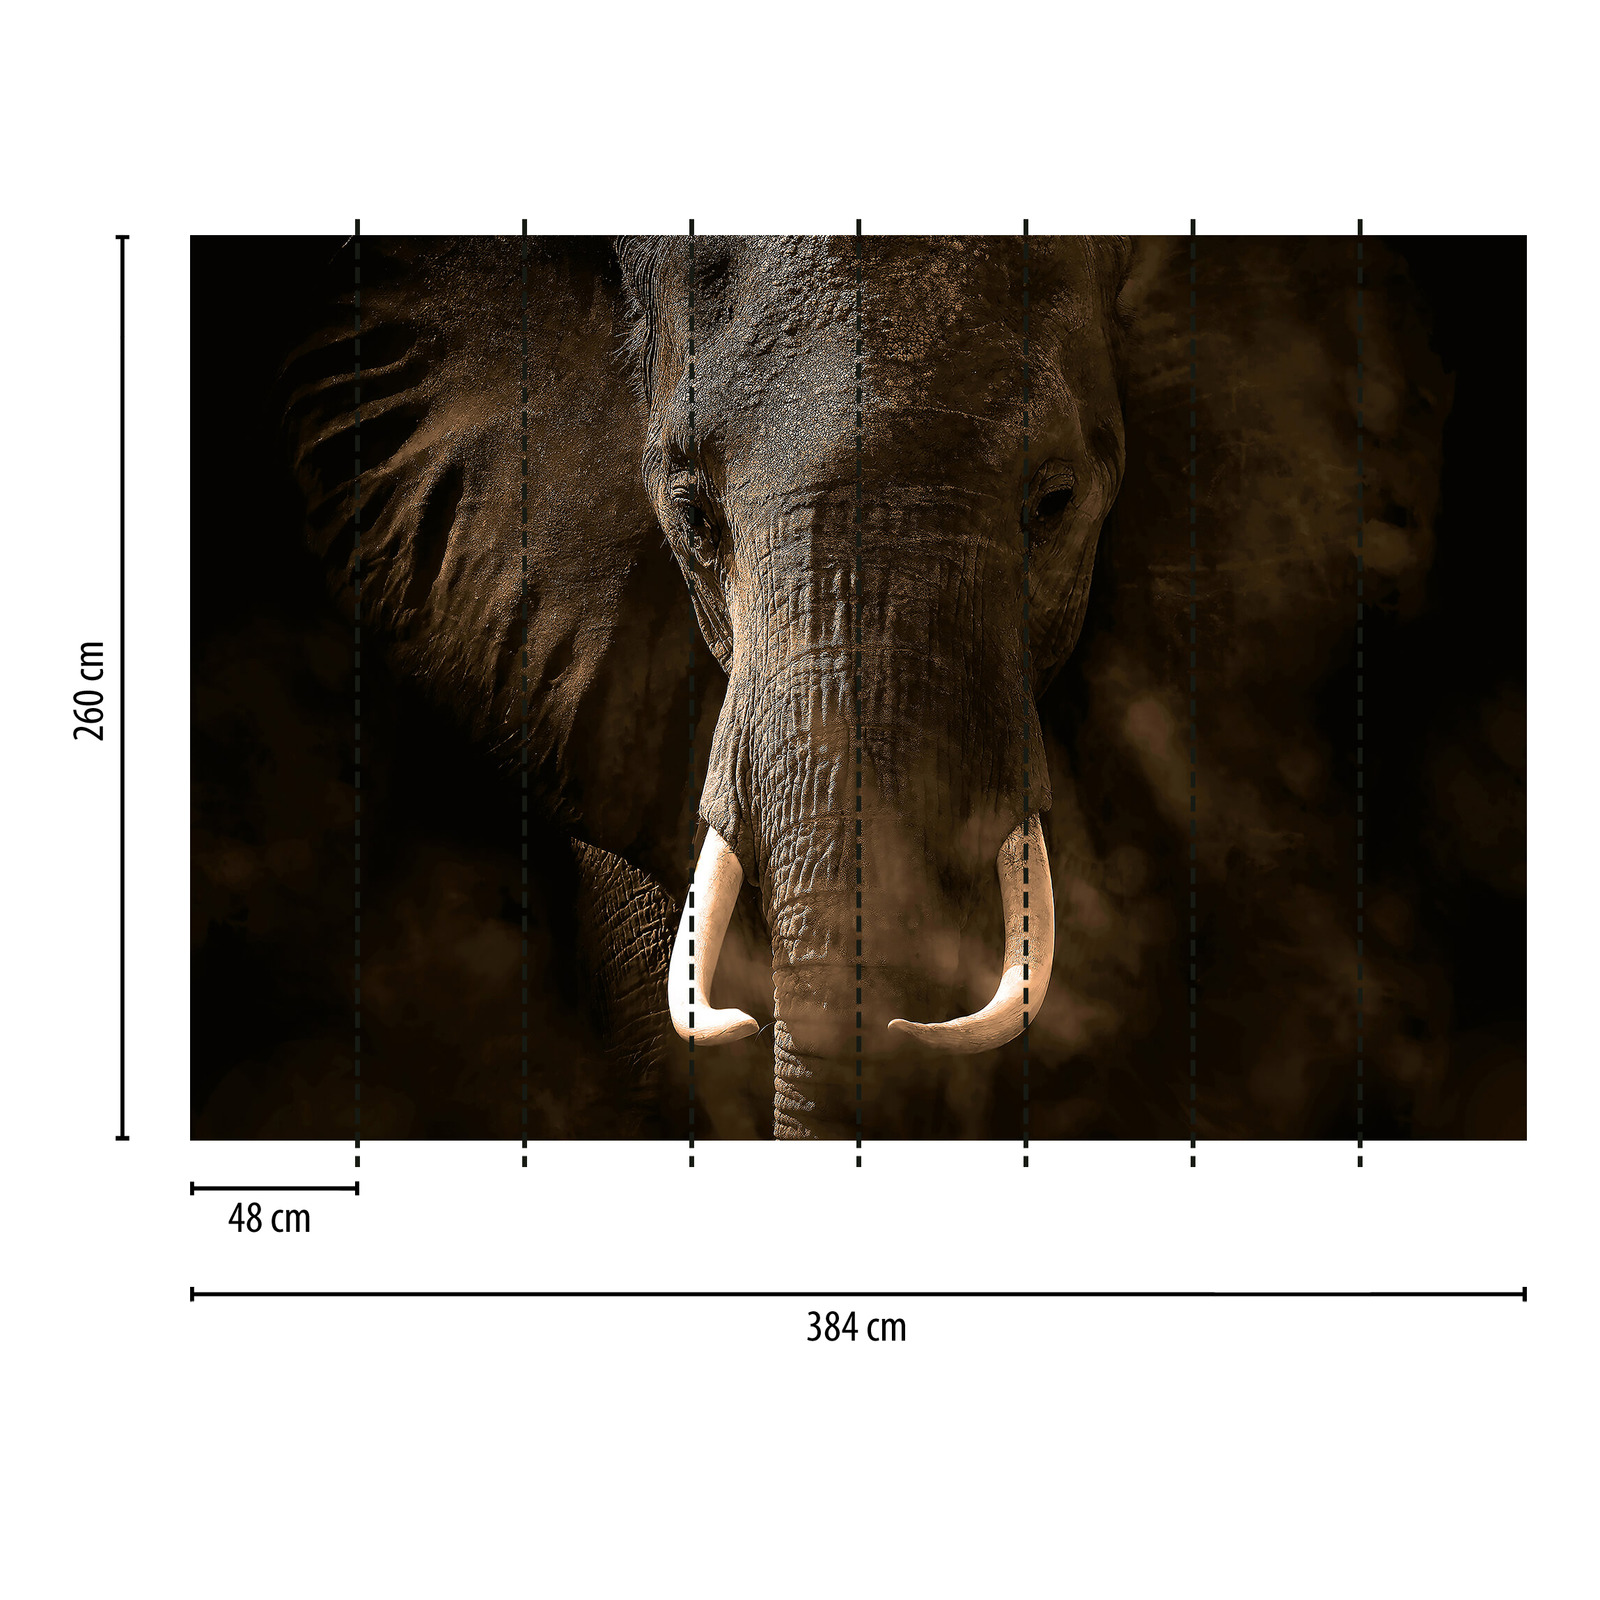             Fototapete Safari Tier Elefant – Grau, Braun, Weiß
        